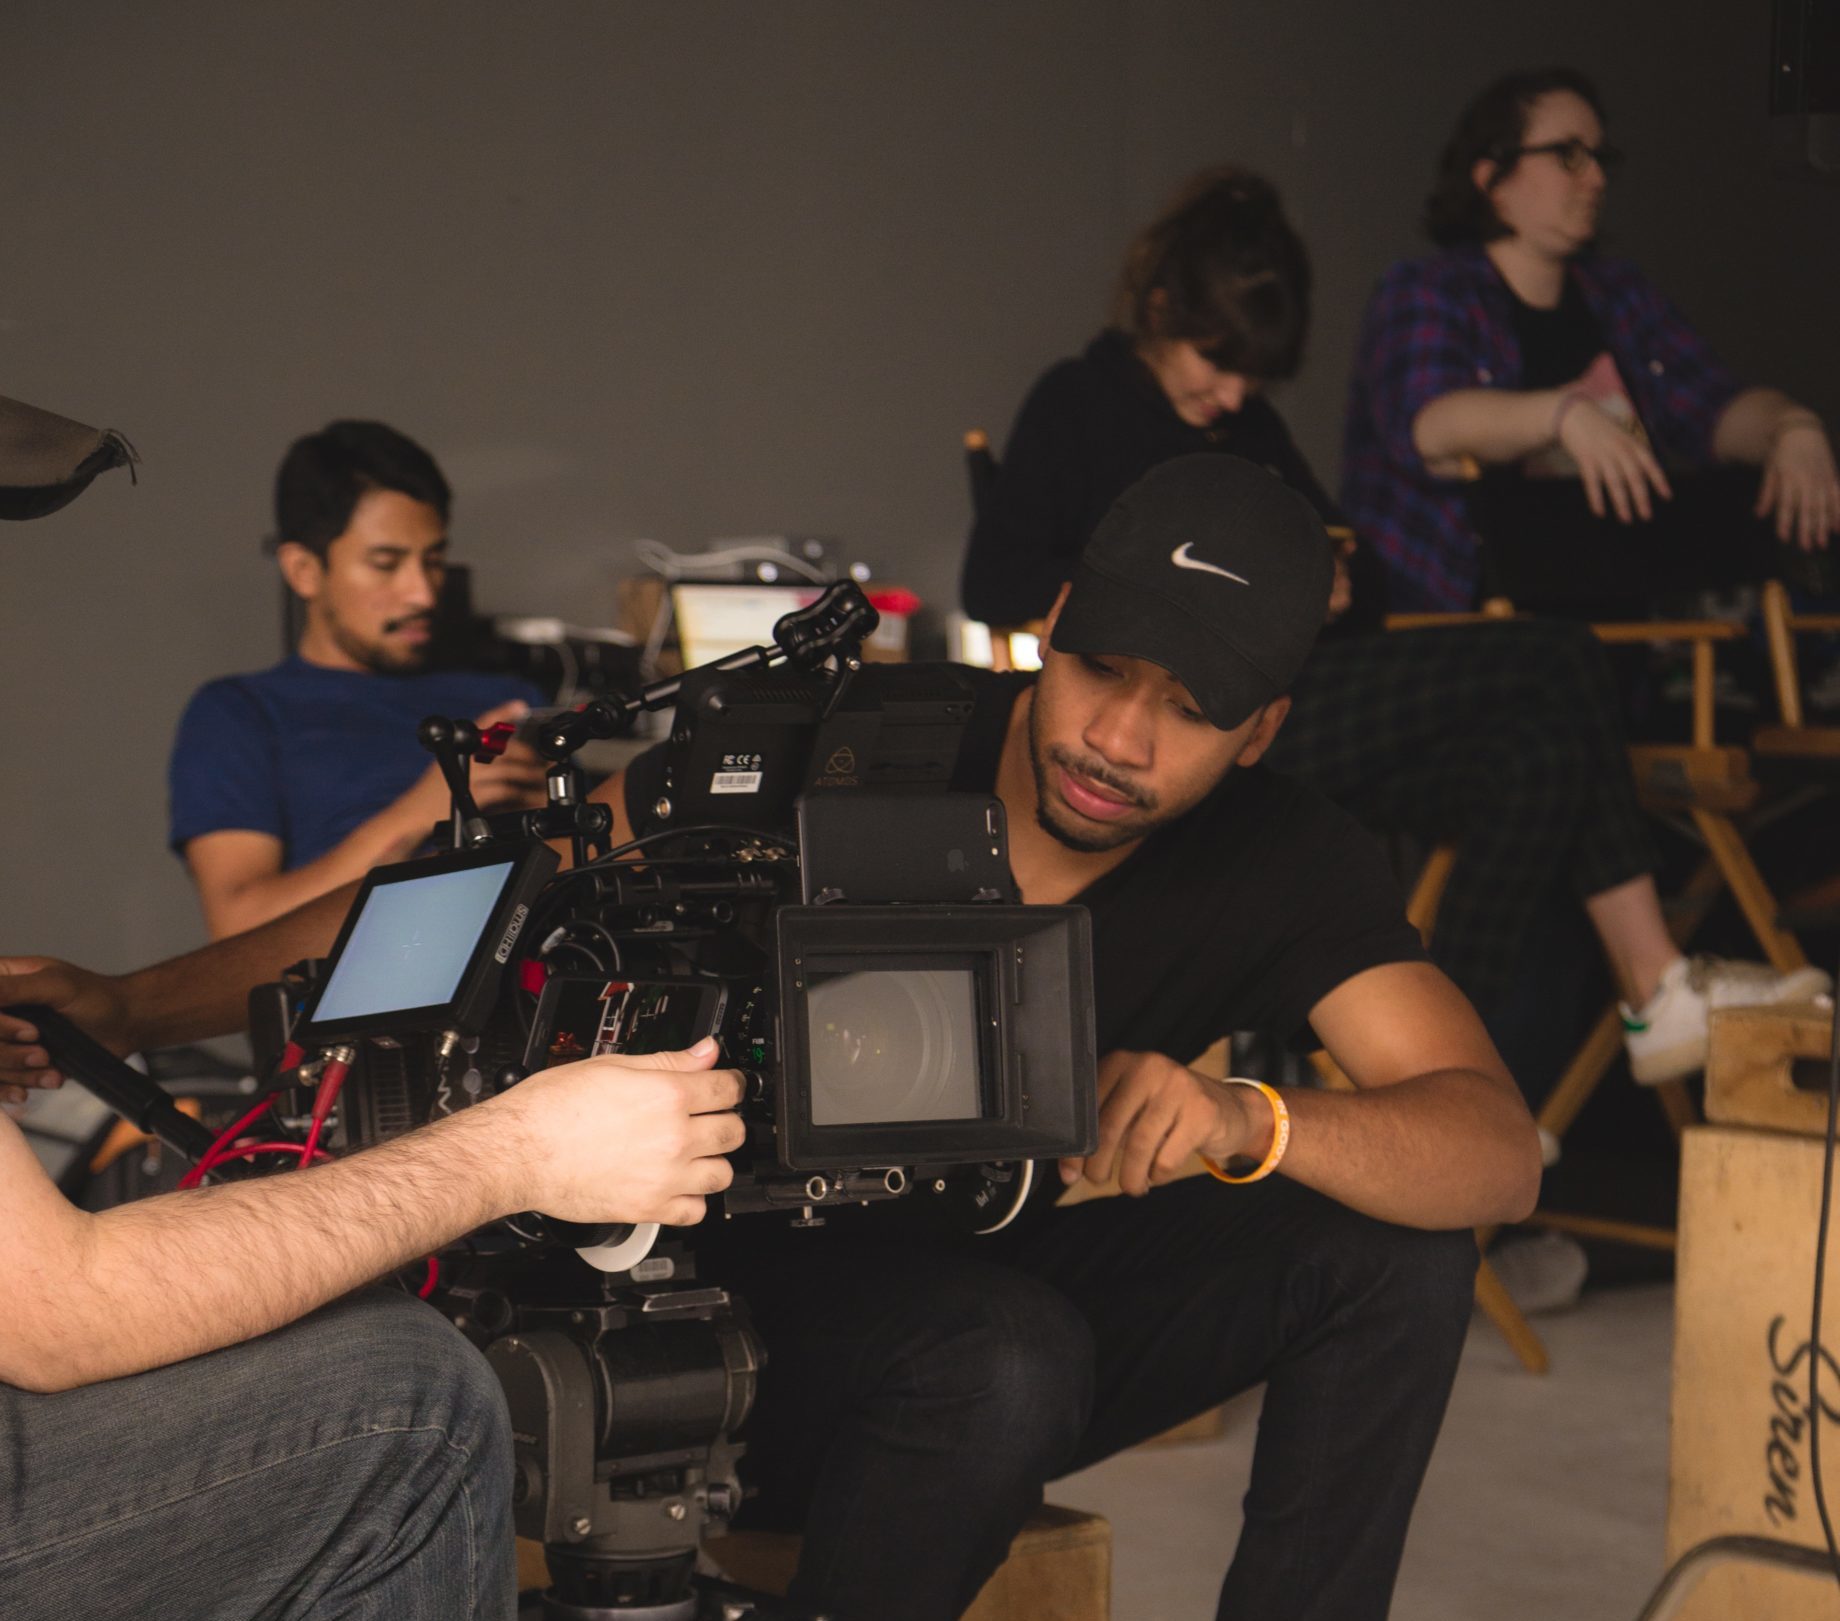 A film crew preparing to film something.